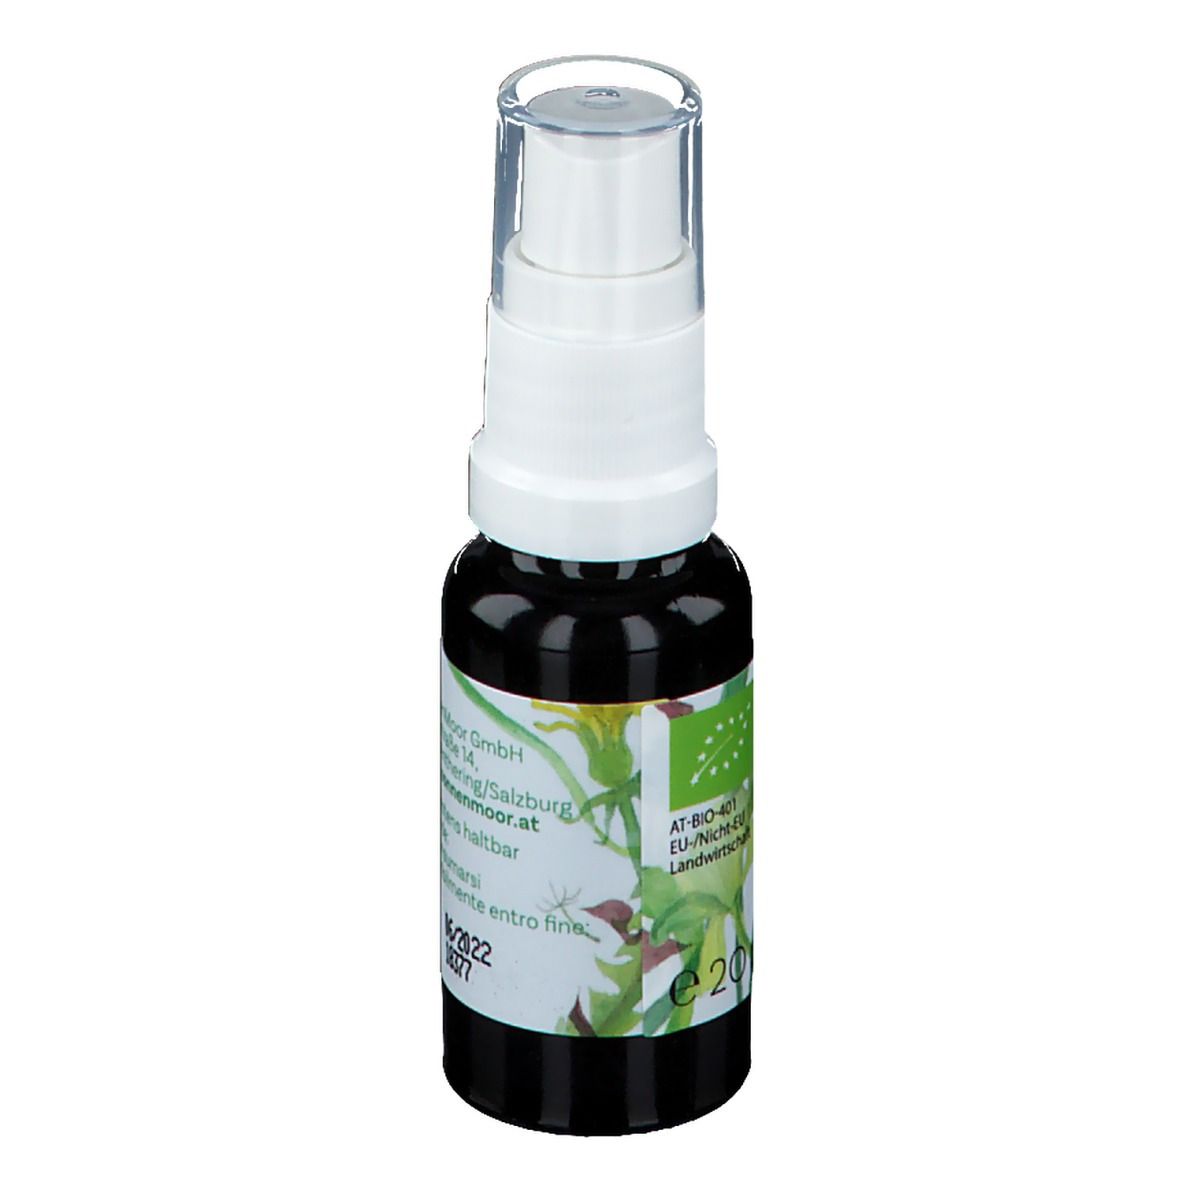 SonnenMoor® Bio-Kräuter Spray